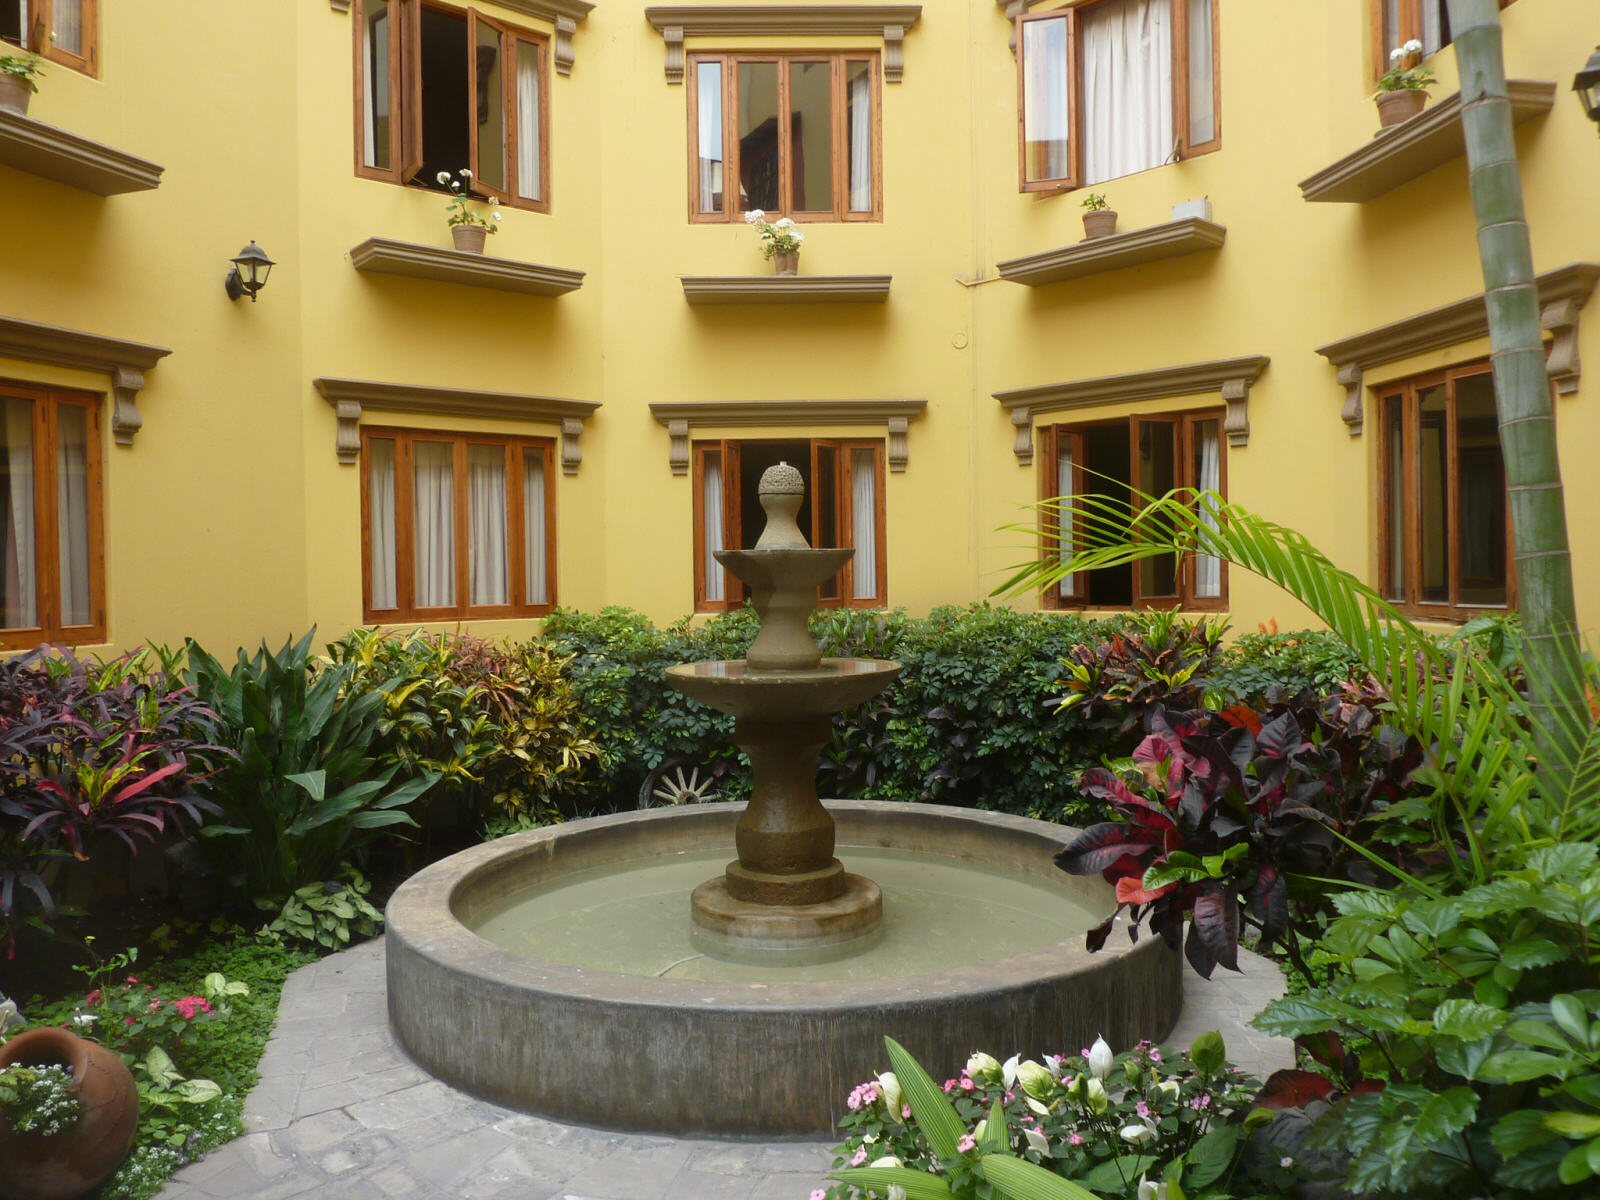 The Antigua Miraflores hotel in Lima, Peru